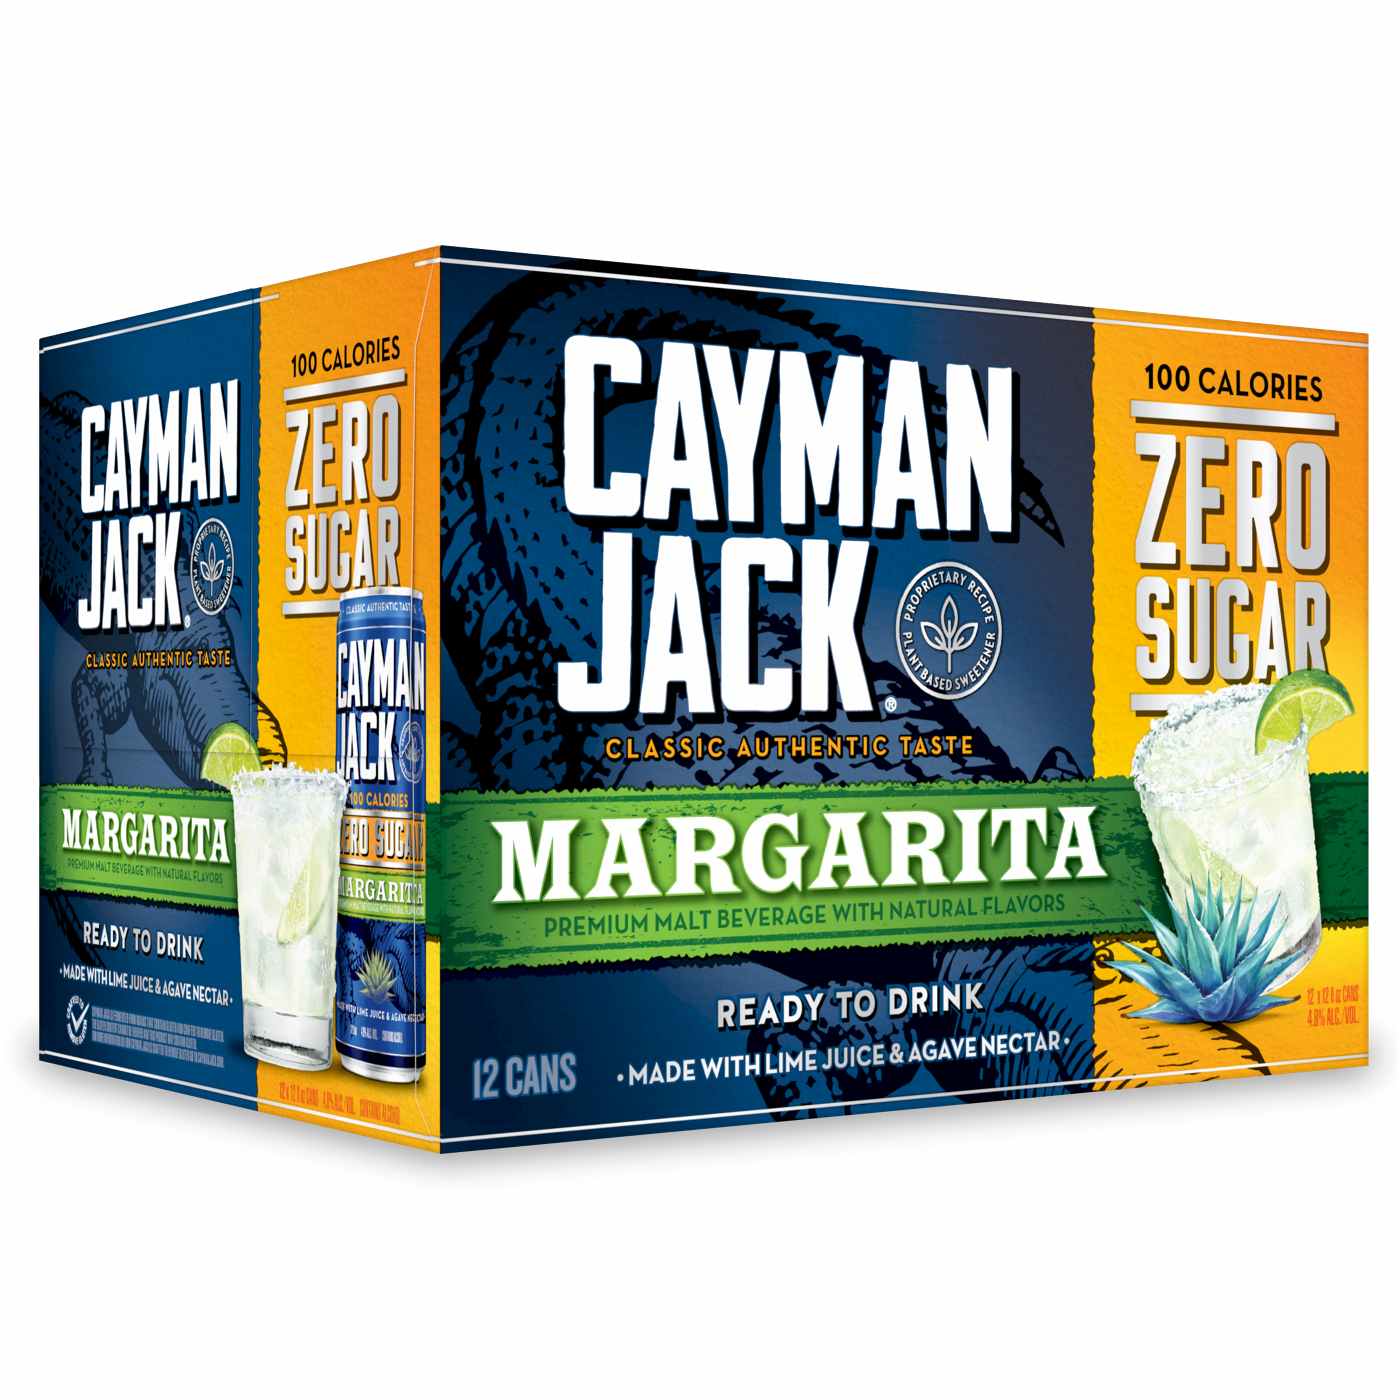 Cayman Jack Zero Sugar Margarita Cans 12 pk; image 2 of 2